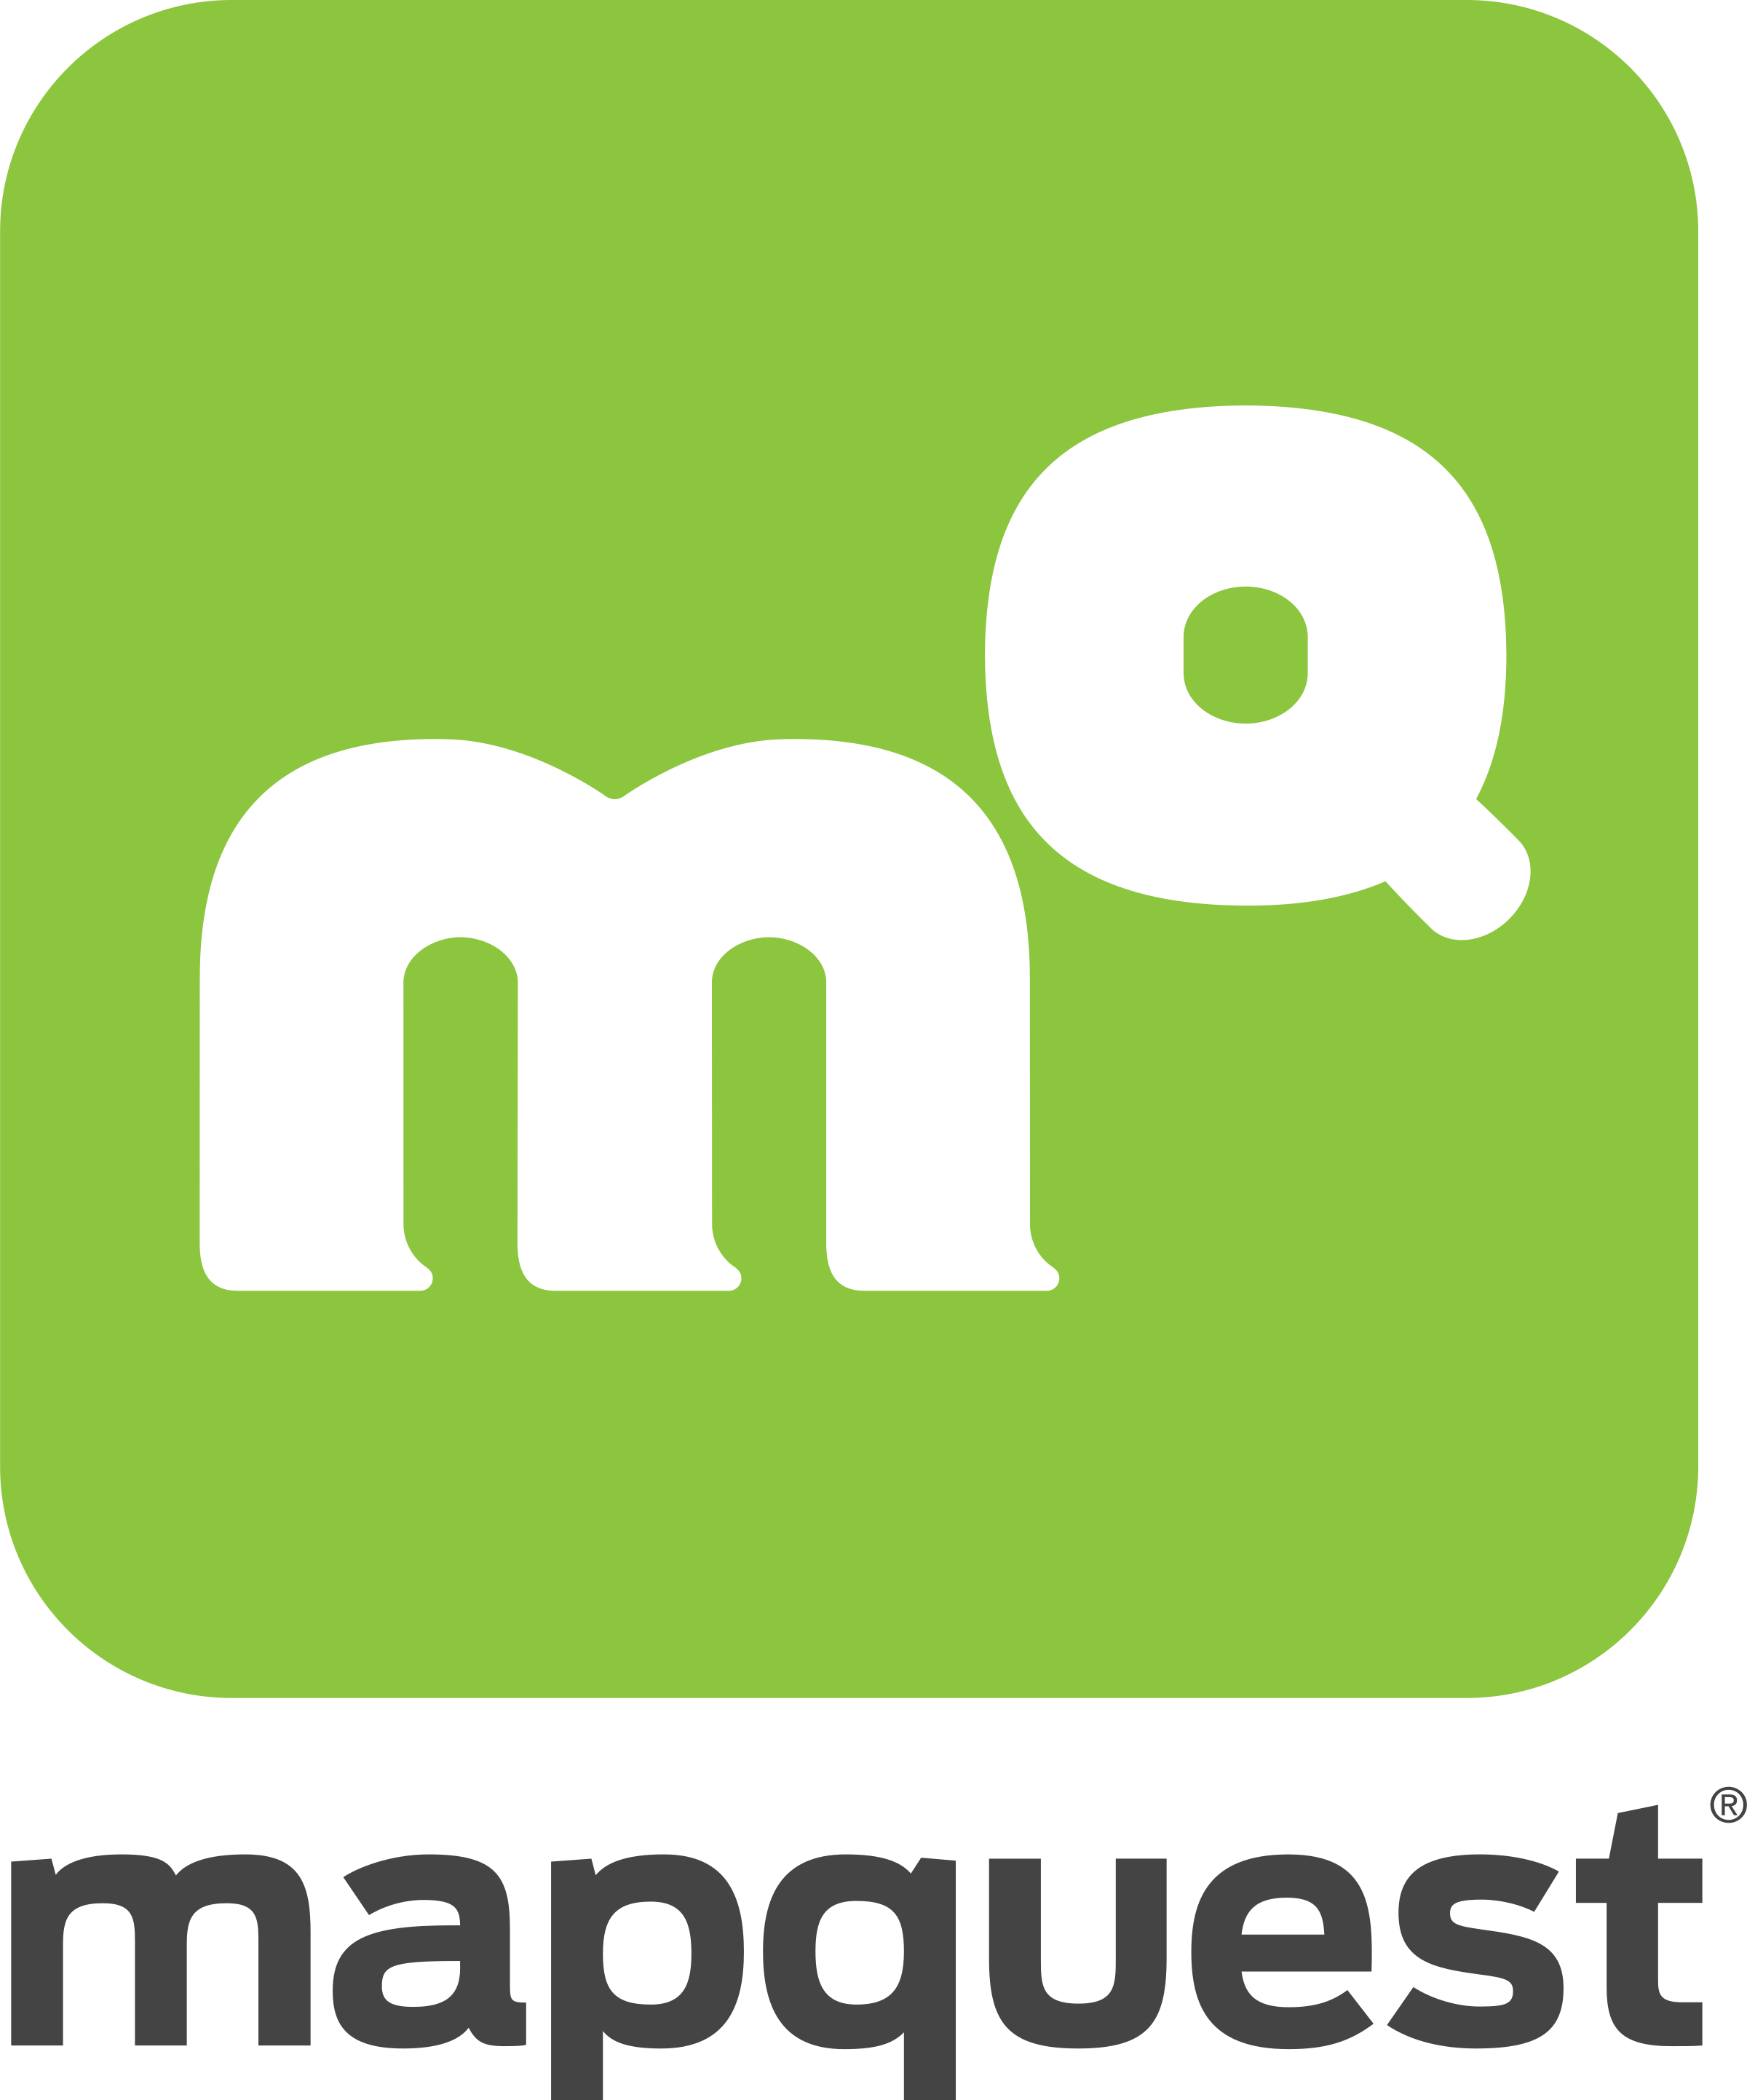 mapquest-3-logo-png-transparent